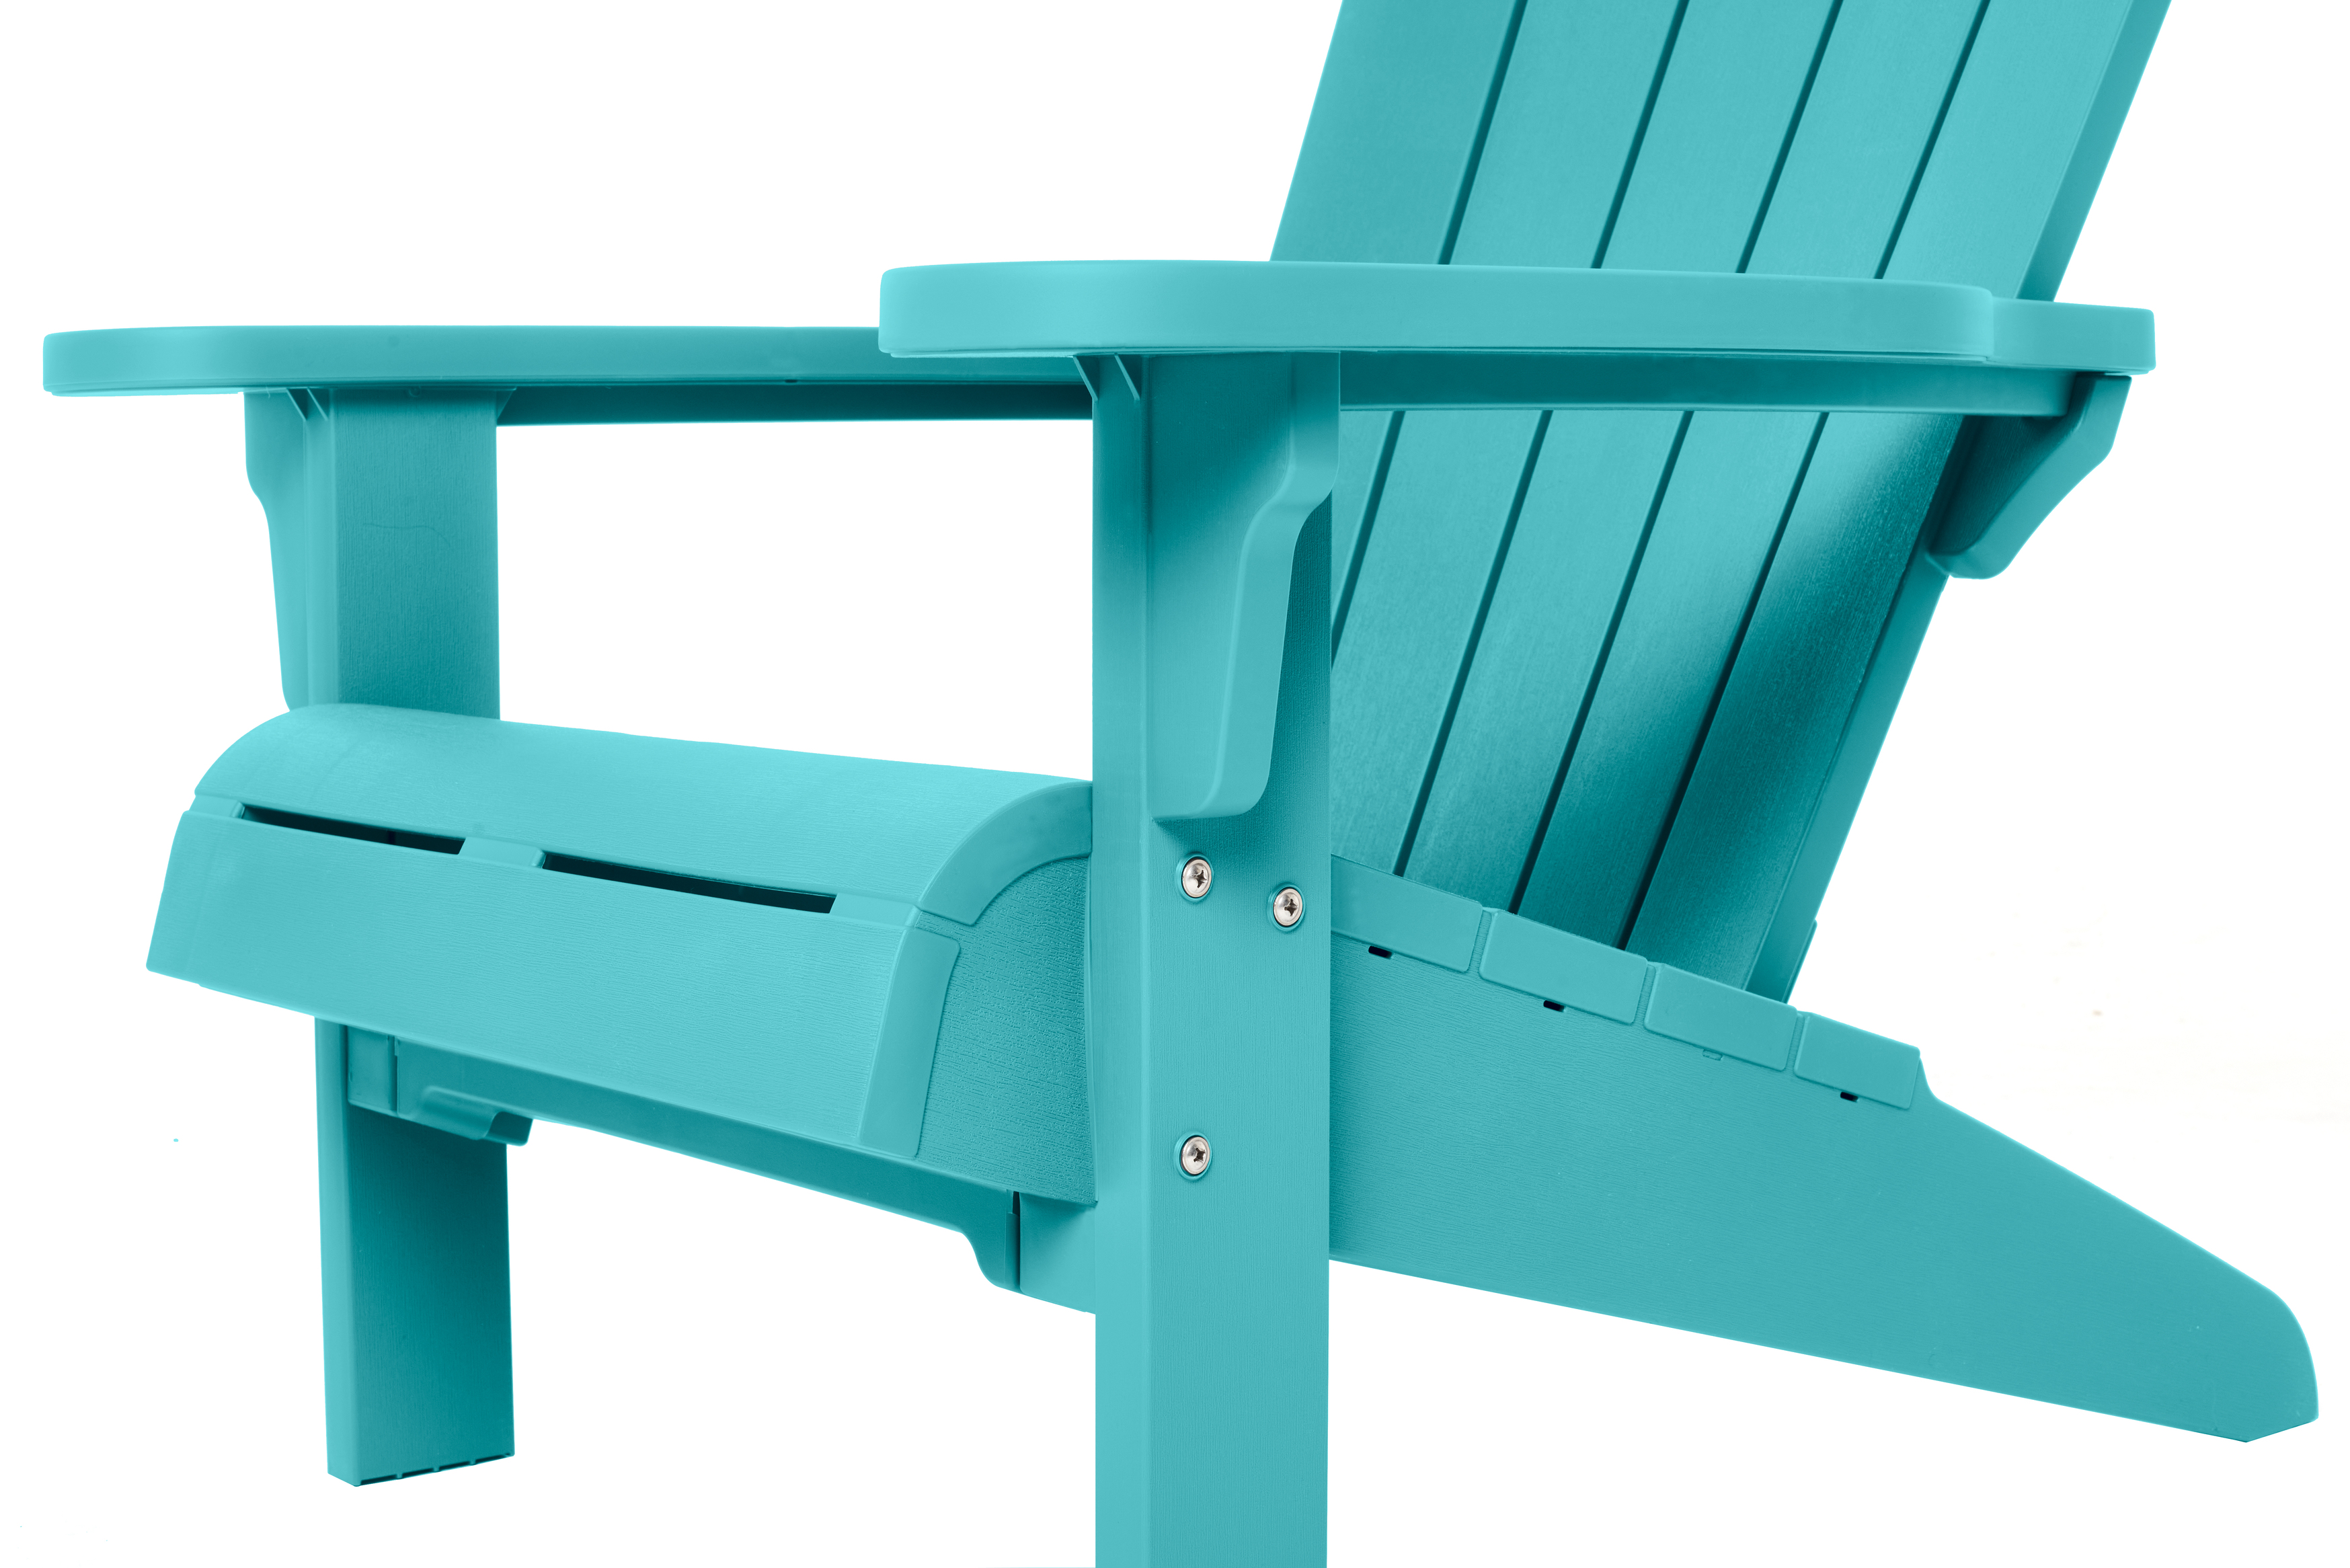 Keter Adirondack Chair, Resin Outdoor Furniture, Teal - image 3 of 7